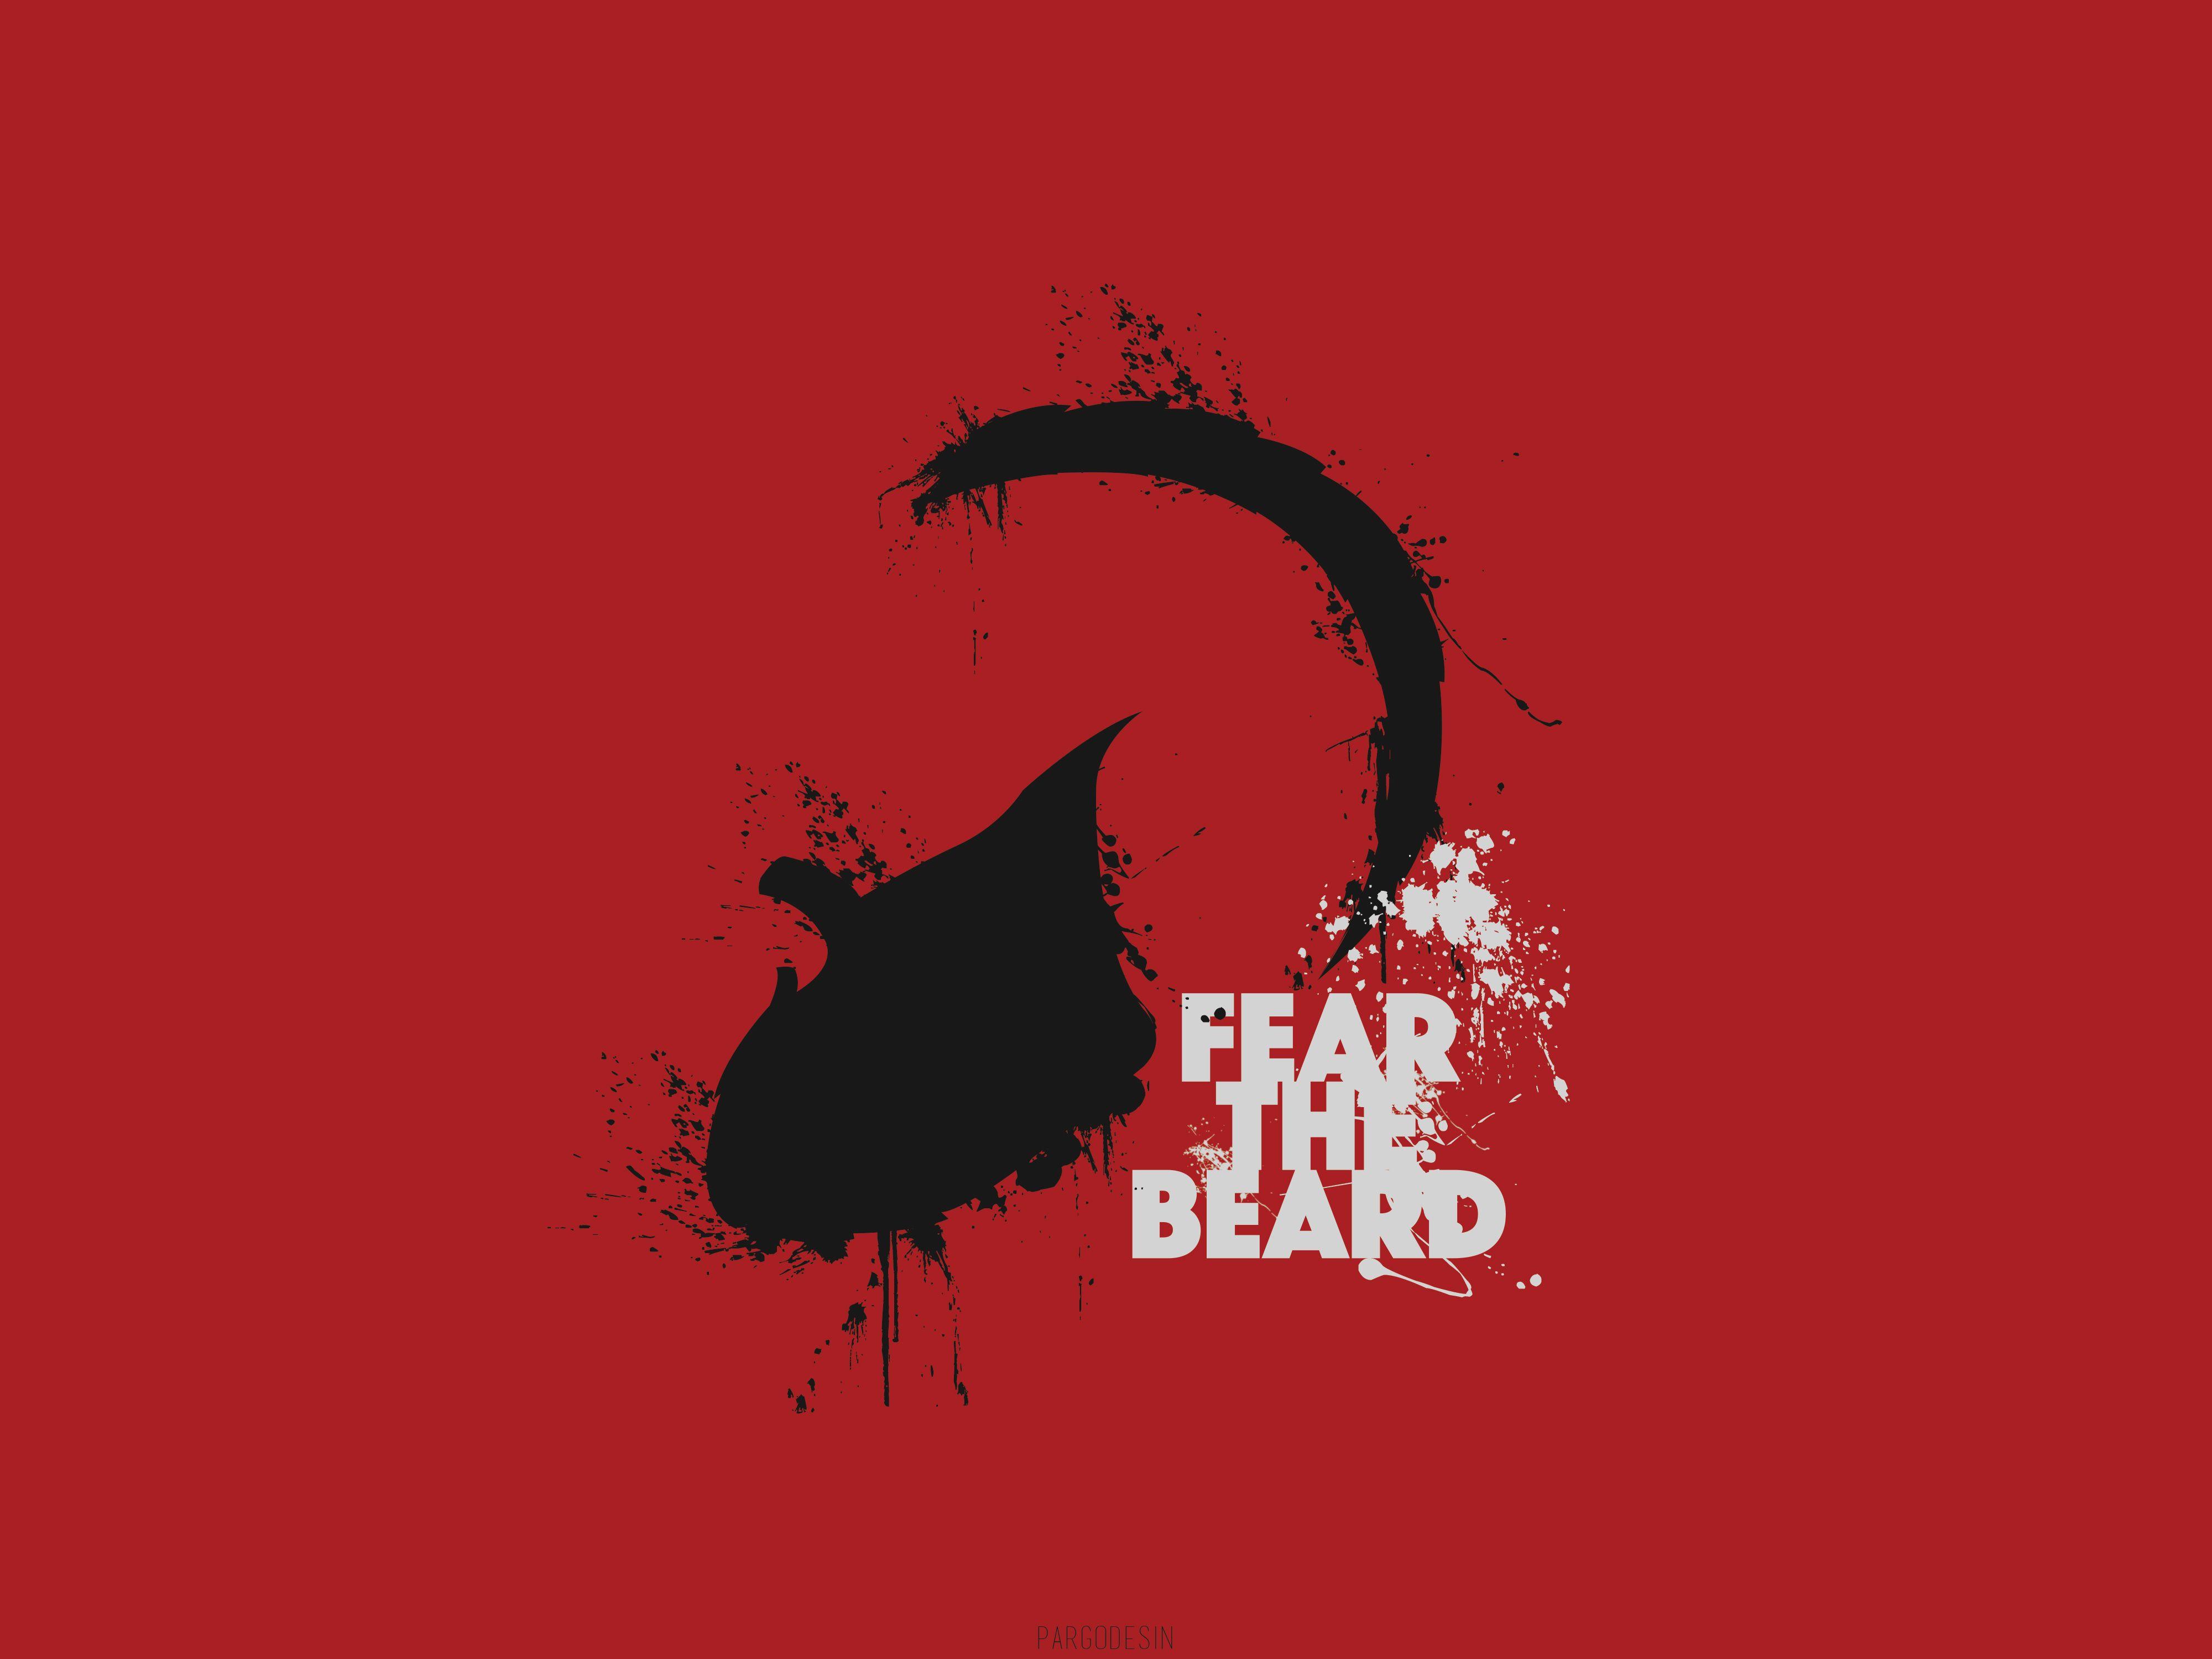 James Harden Logo - Fear the beard james harden - BentalaSalon.com